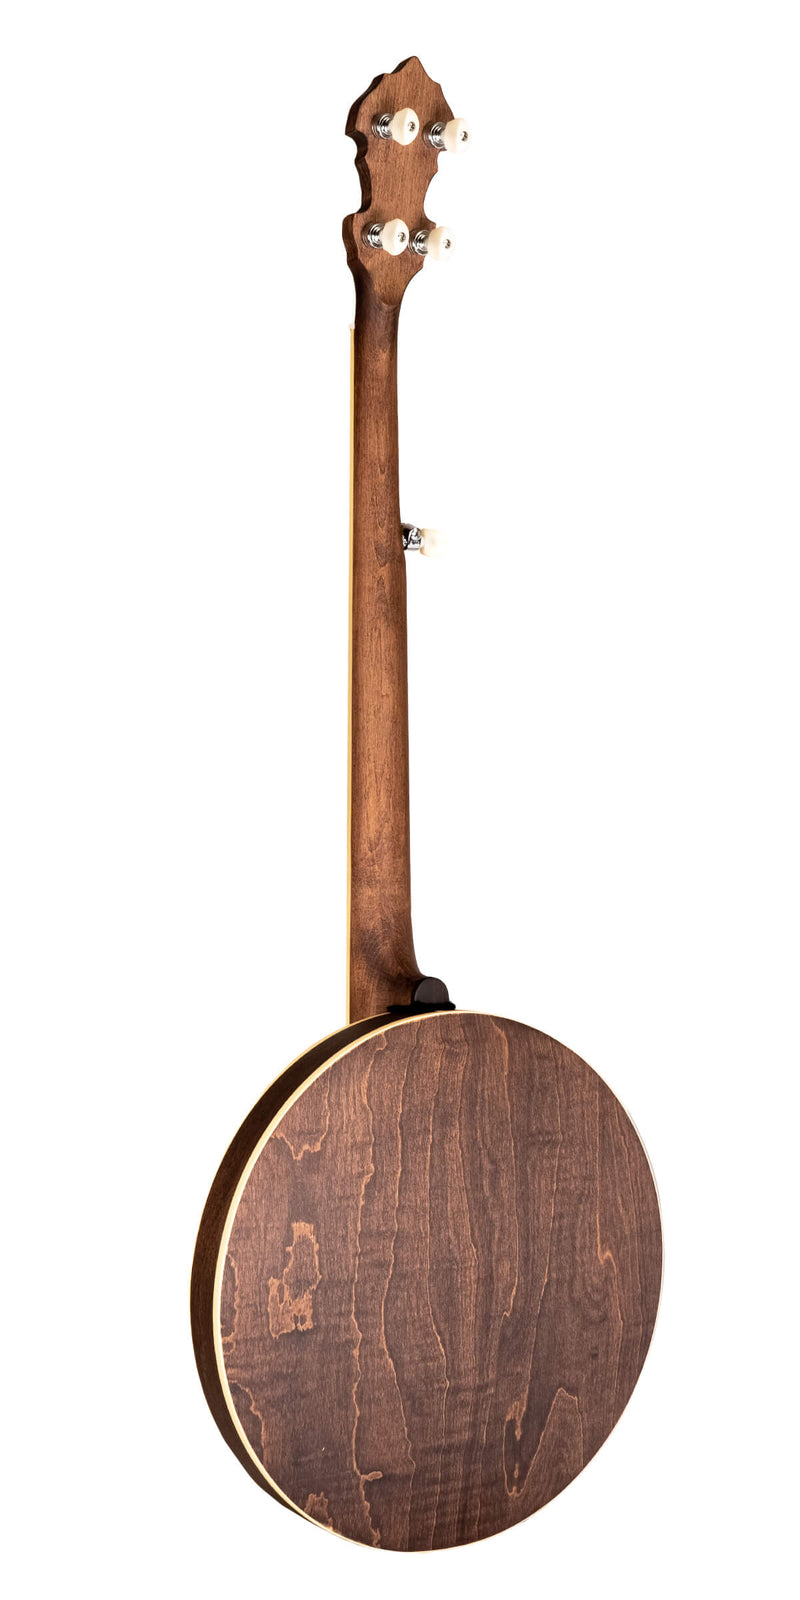 Gold Tone OB-150 Orange Blossom 5 String Banjo with Hard Case